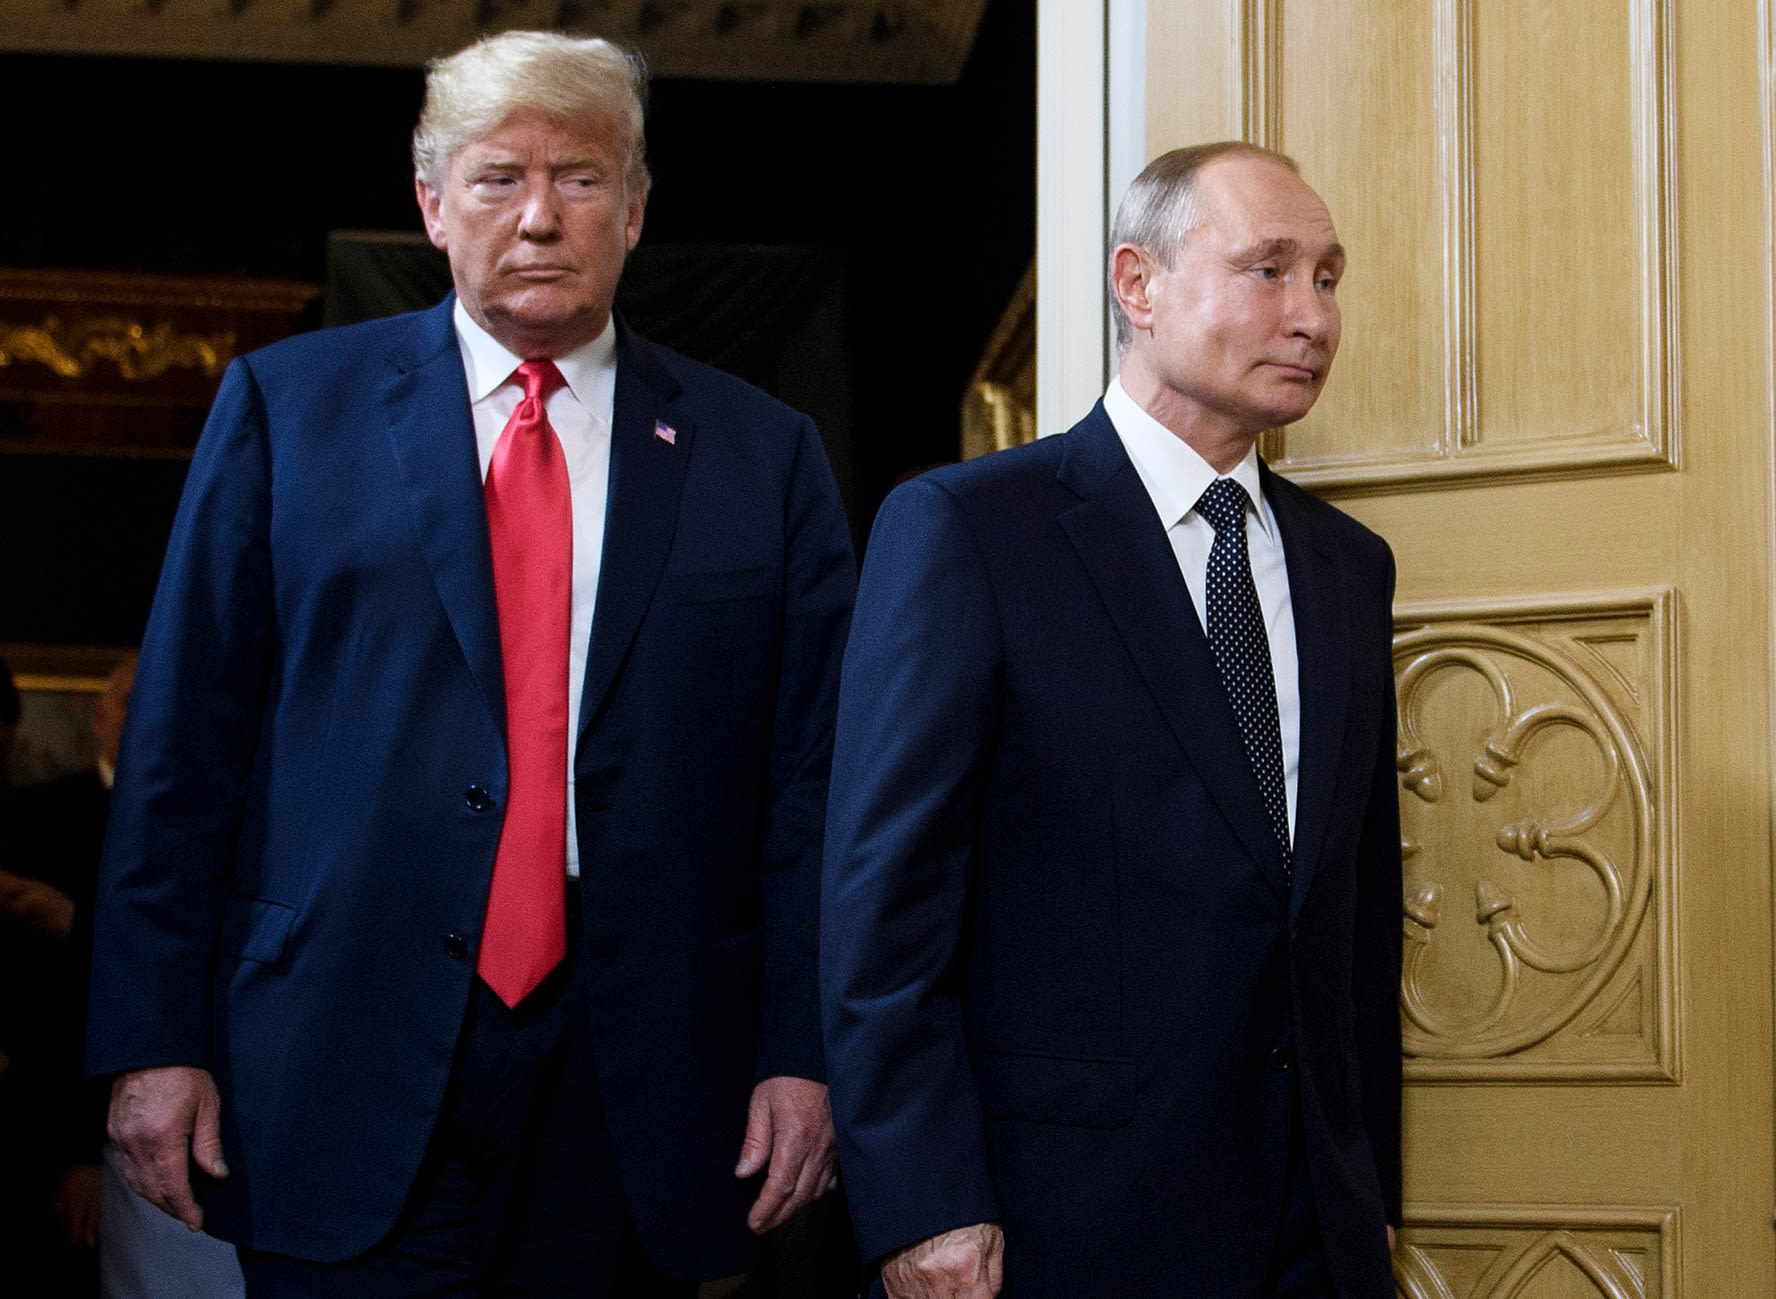 Photo of Donald Trump and Putin displayed at RNC before speech